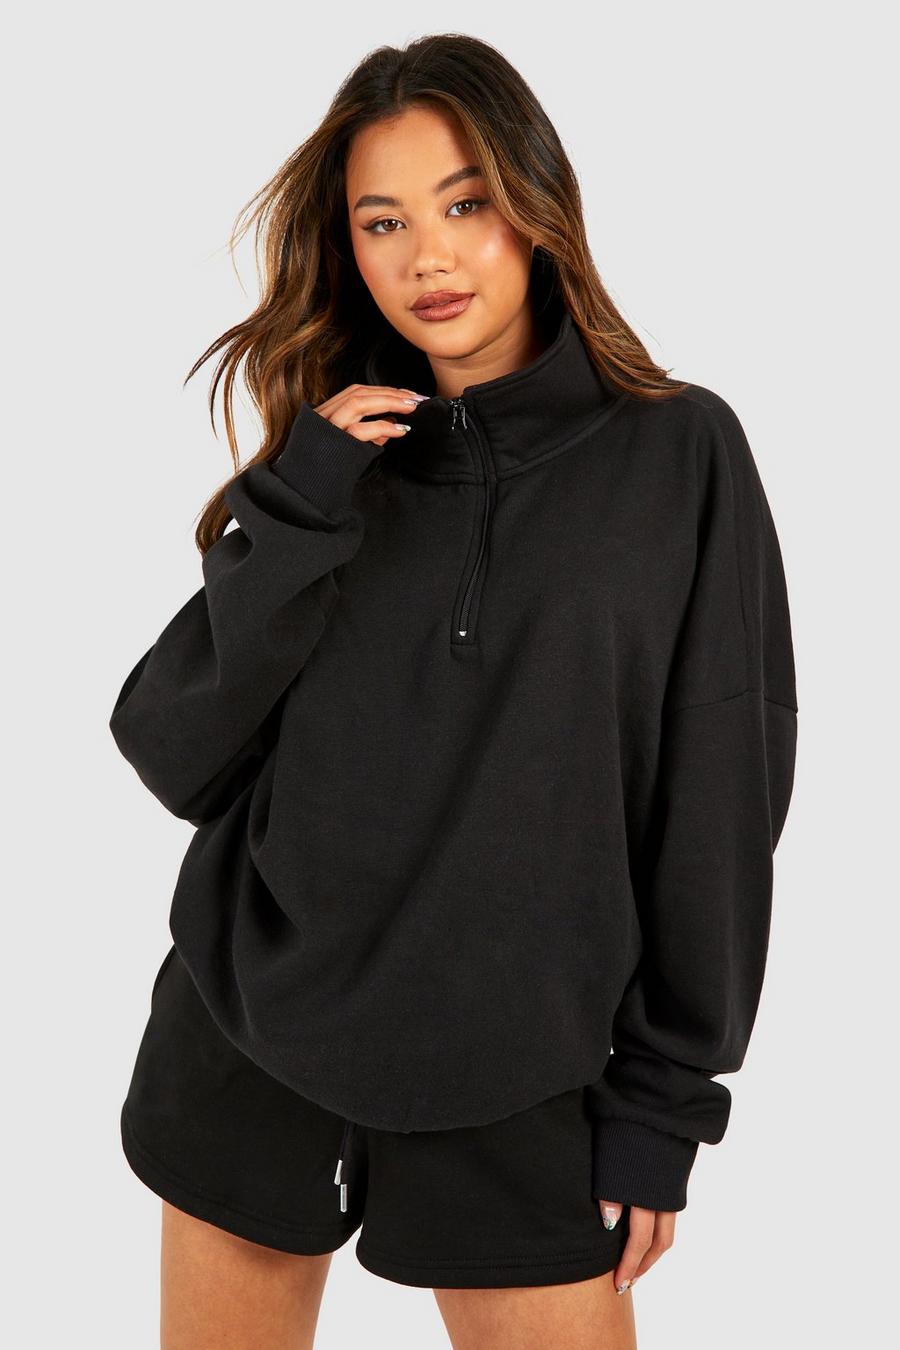 https://media.boohoo.com/i/boohoo/gzz49639_black_xl/female-black-half-zip-oversized-sweatshirt/?w=900&qlt=default&fmt.jp2.qlt=70&fmt=auto&sm=fit